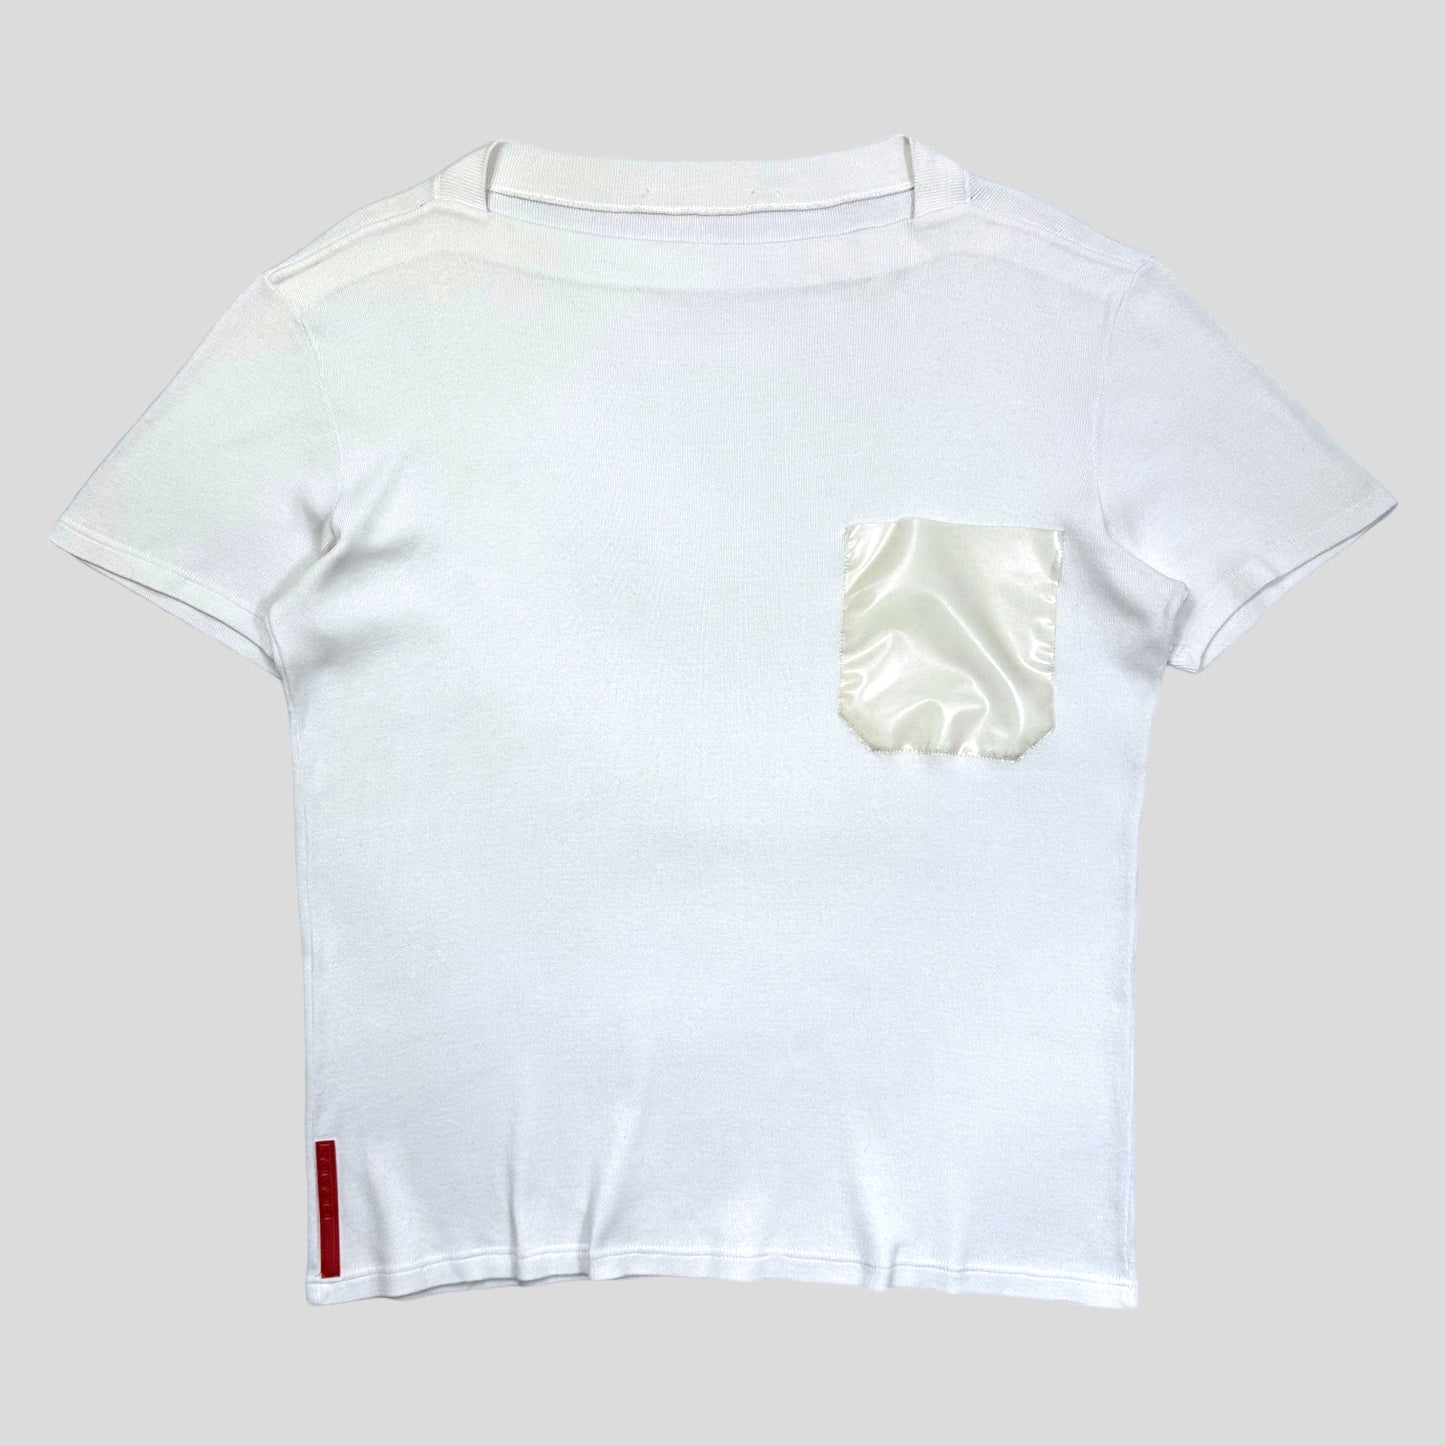 Prada Sport SS99 Latex Pocket T-shirt - M